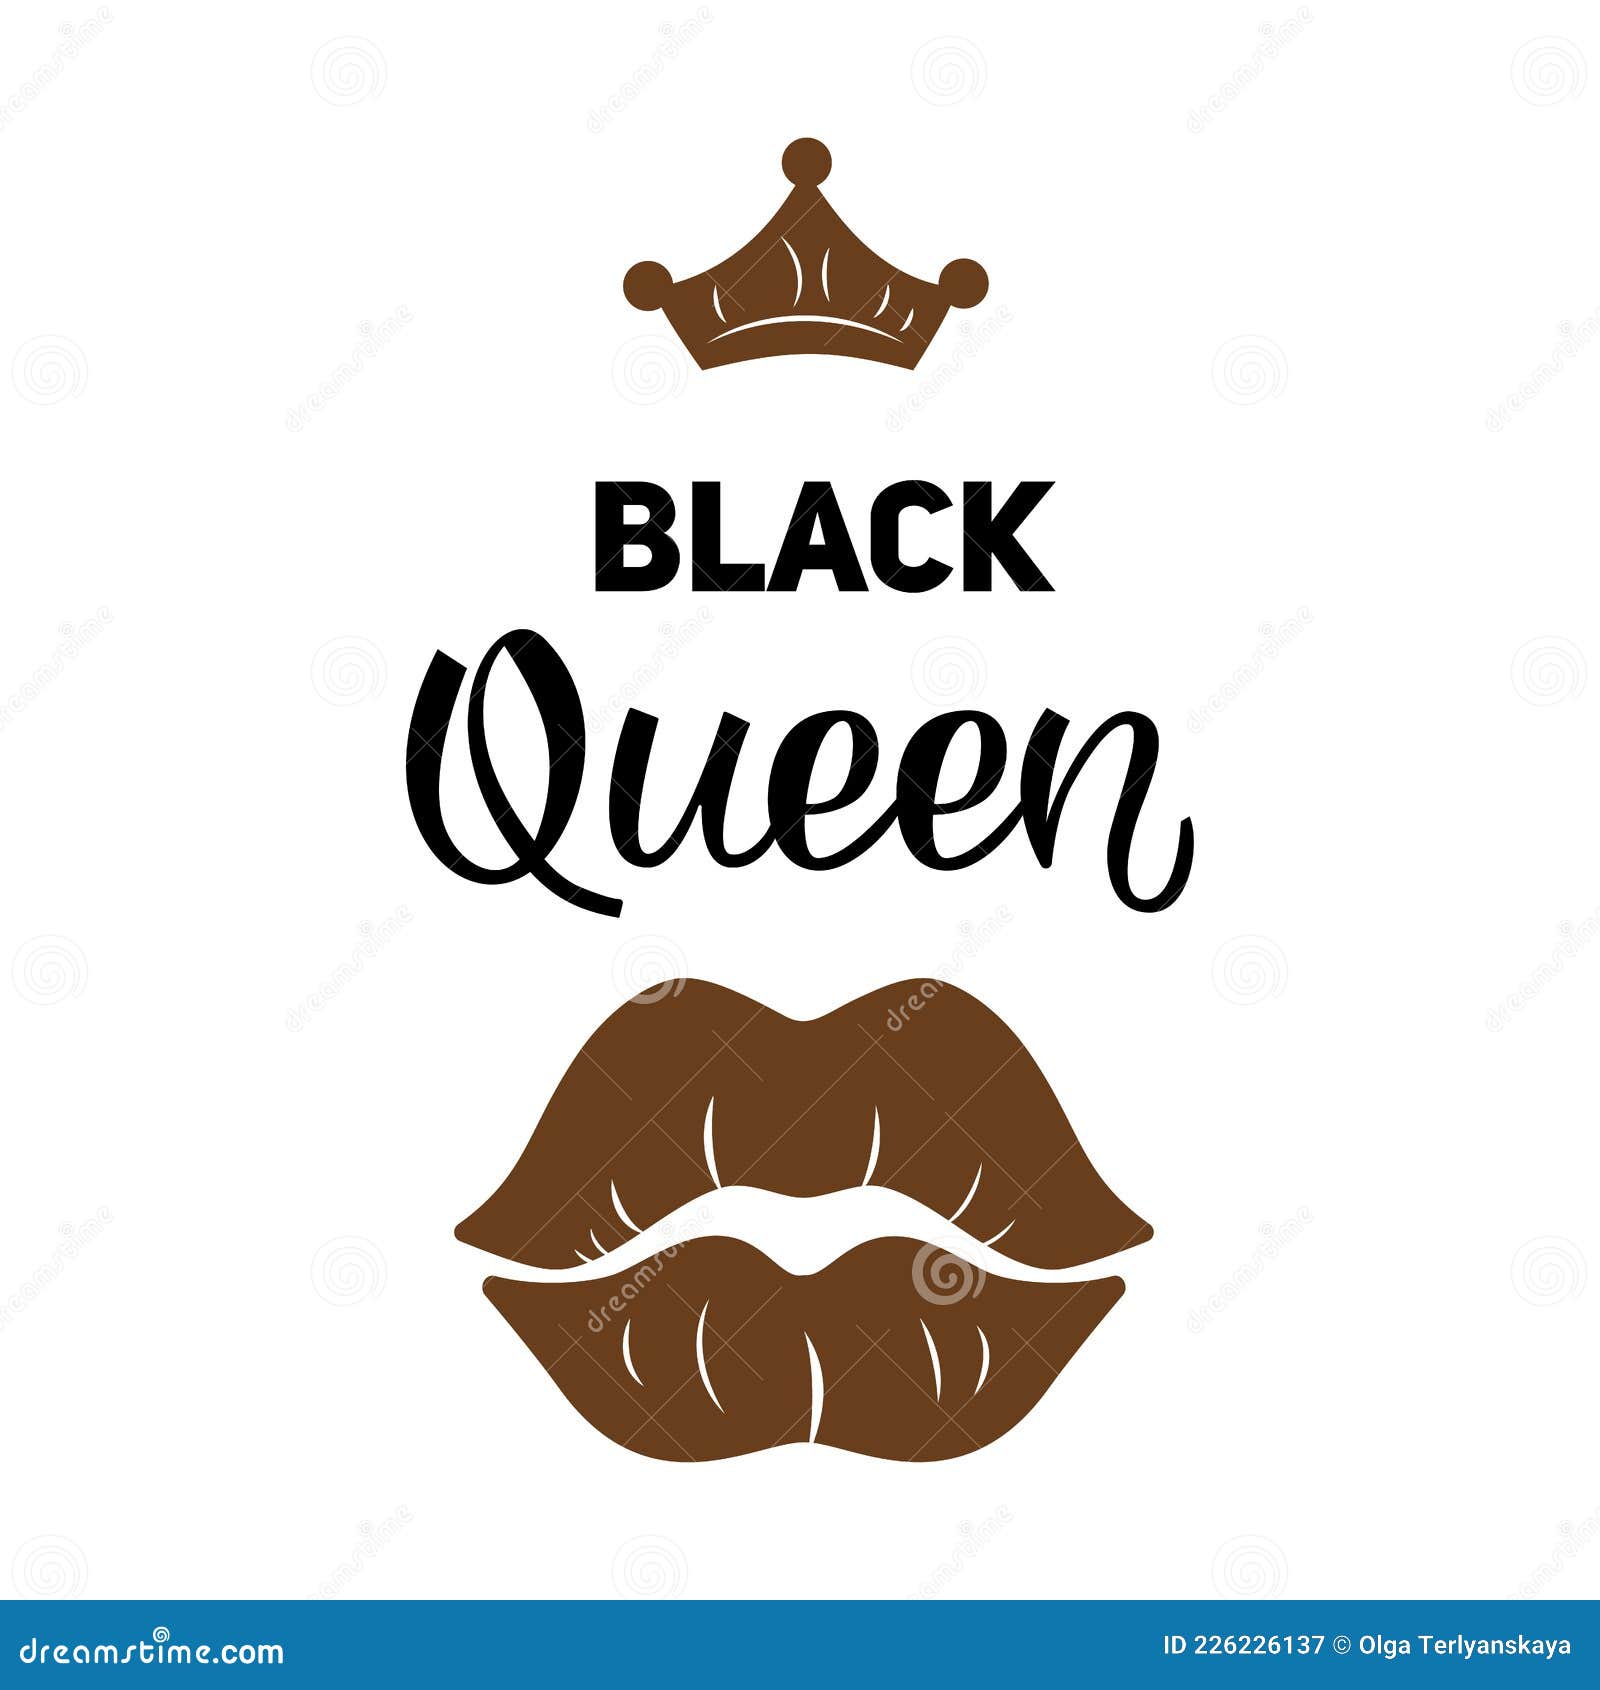 Queen images melanin Retro Afro